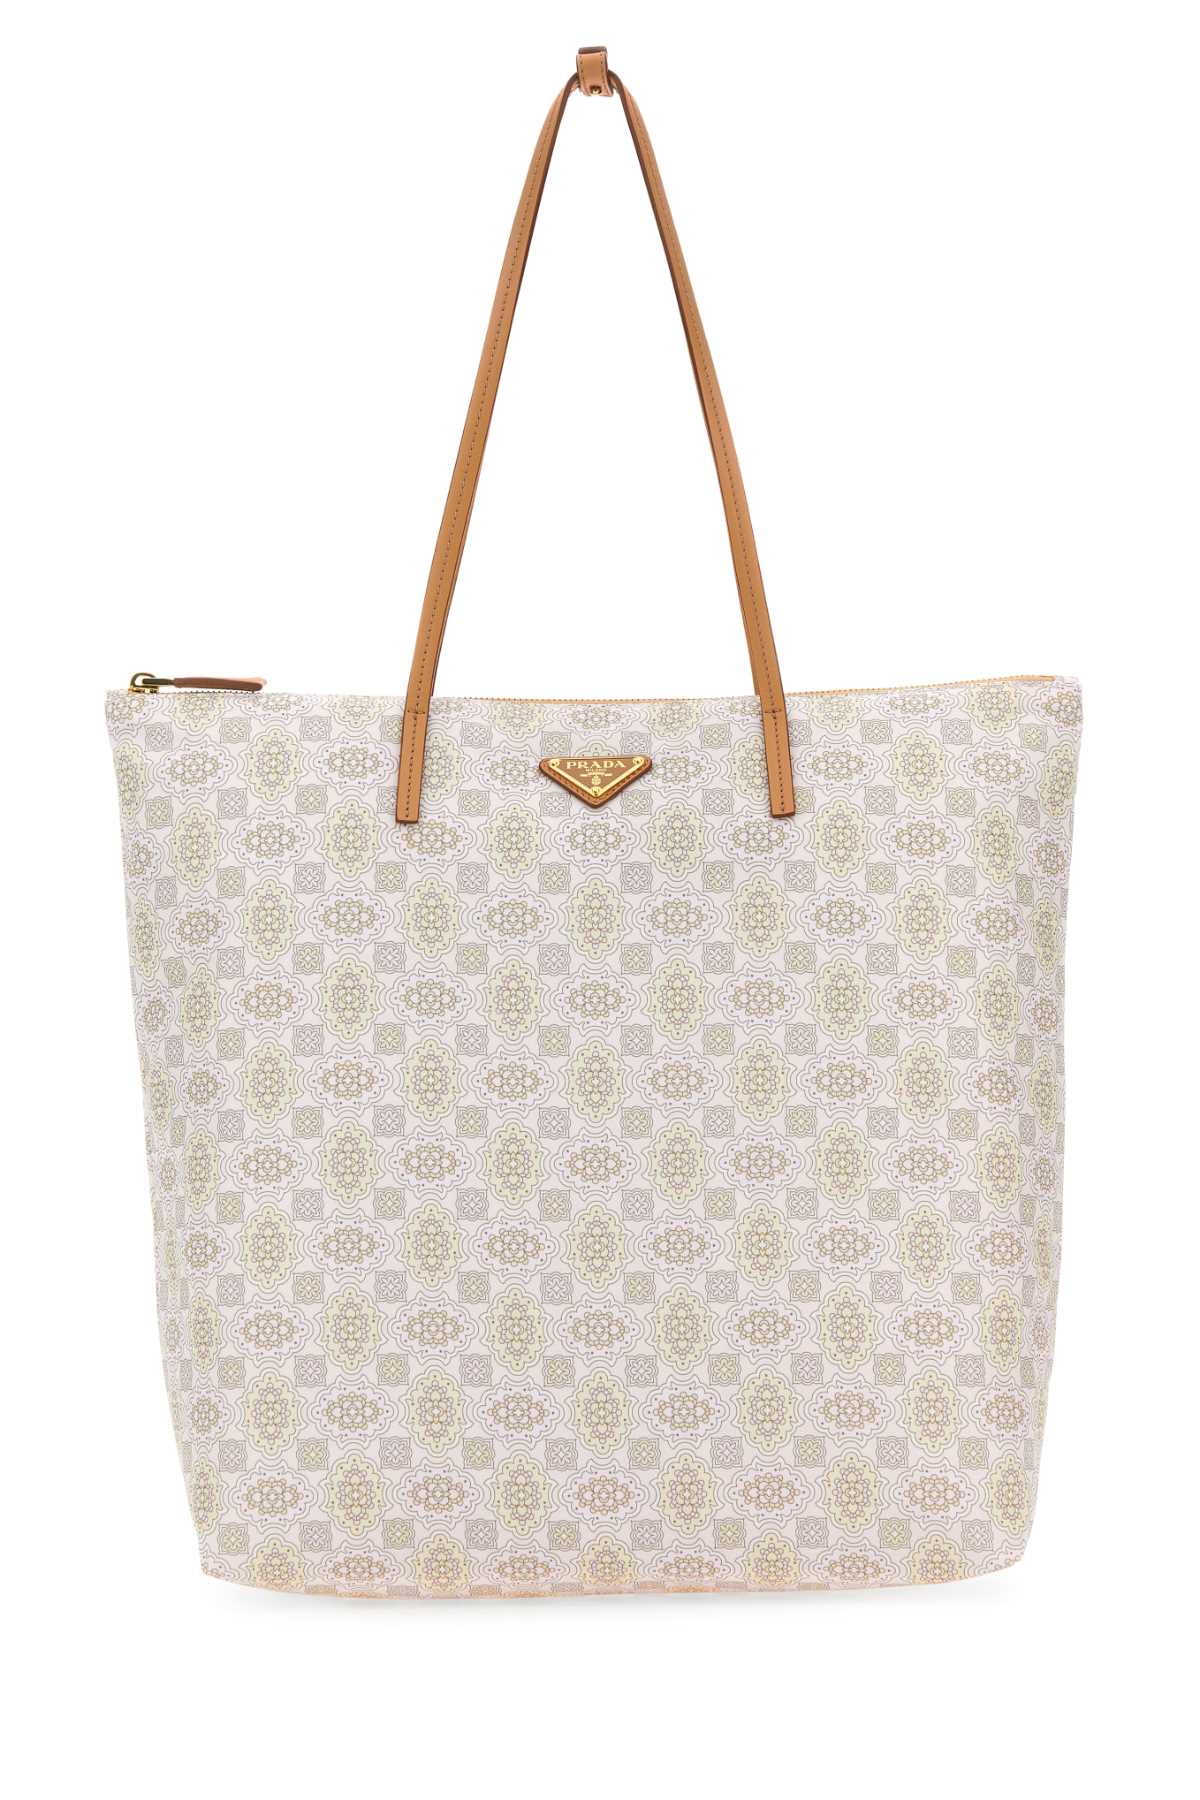 Prada Printed Re-nylon Shopping Bag